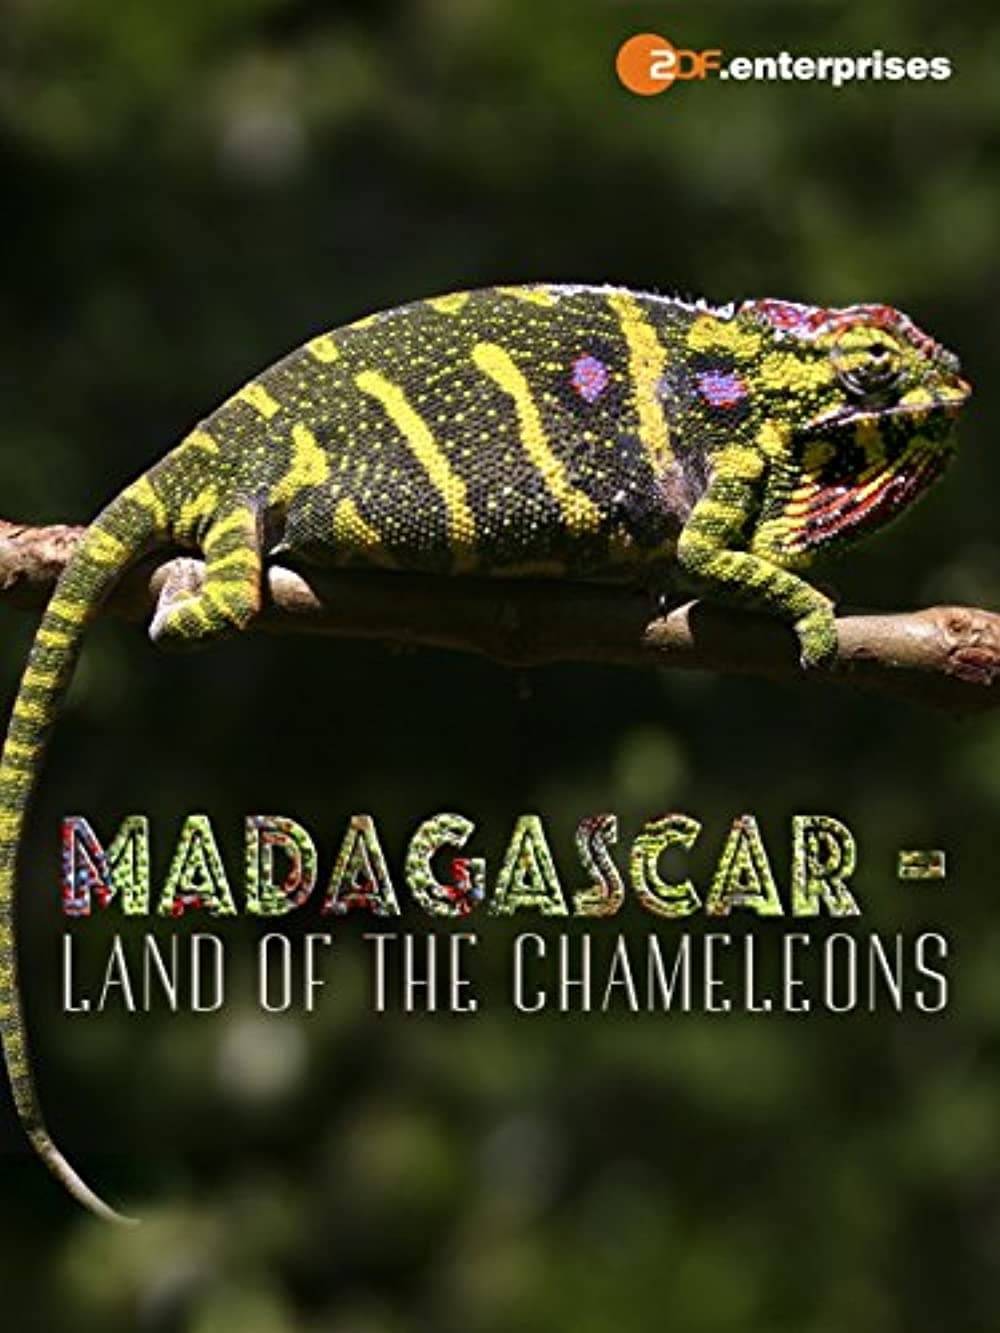 Madagascar: Land of the Chameleons